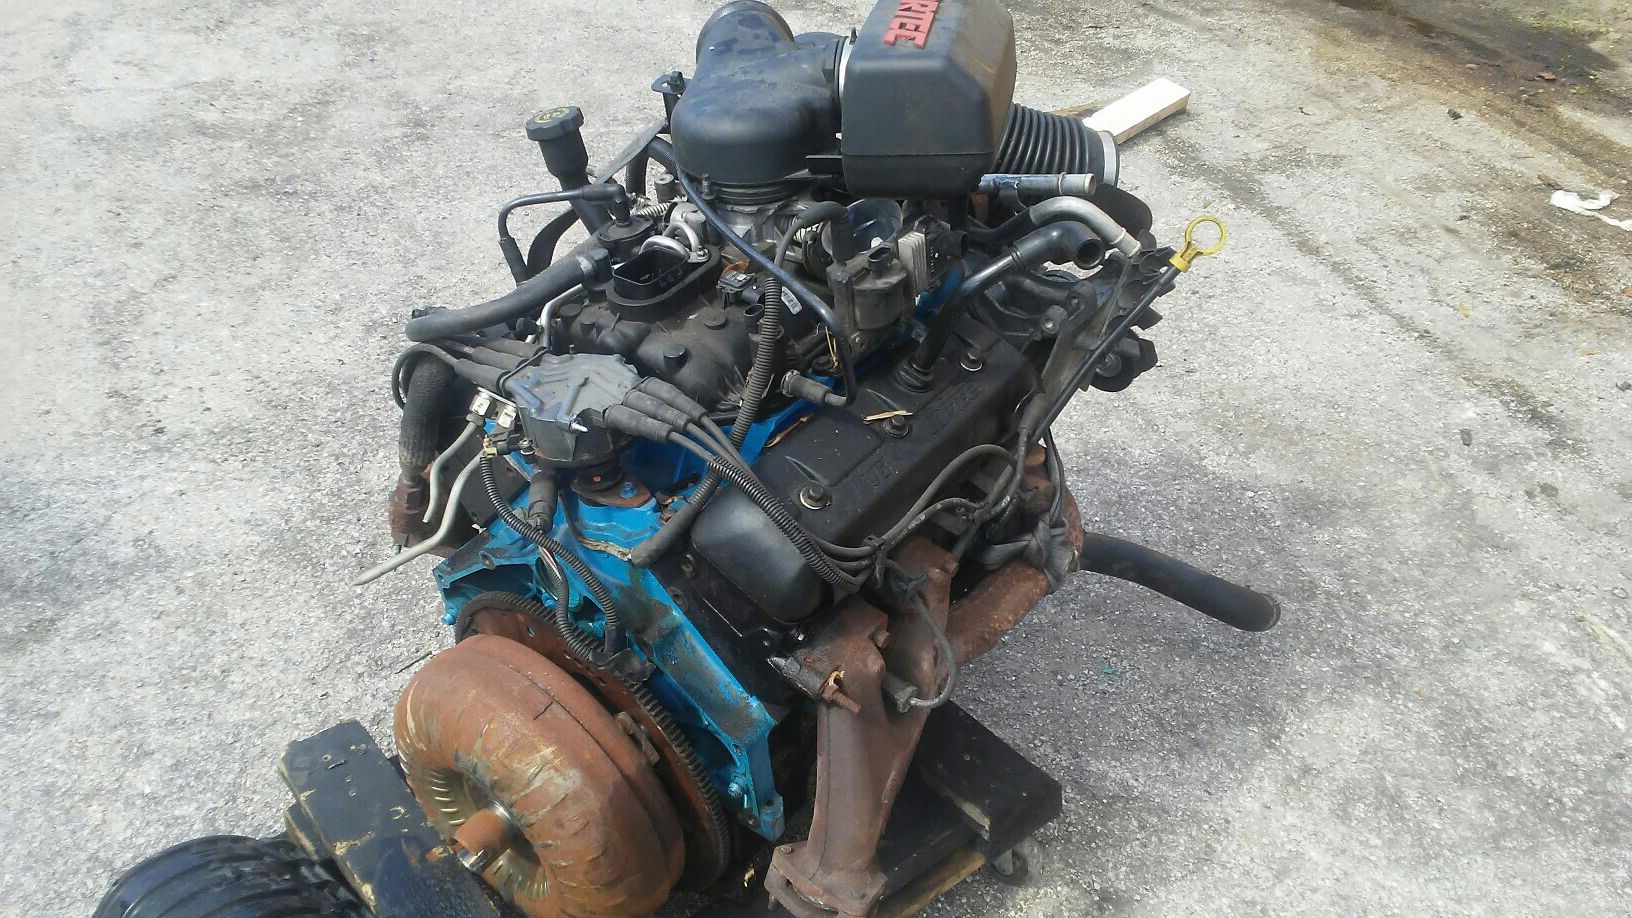 1997 Chevy Silverado 1500 Engine